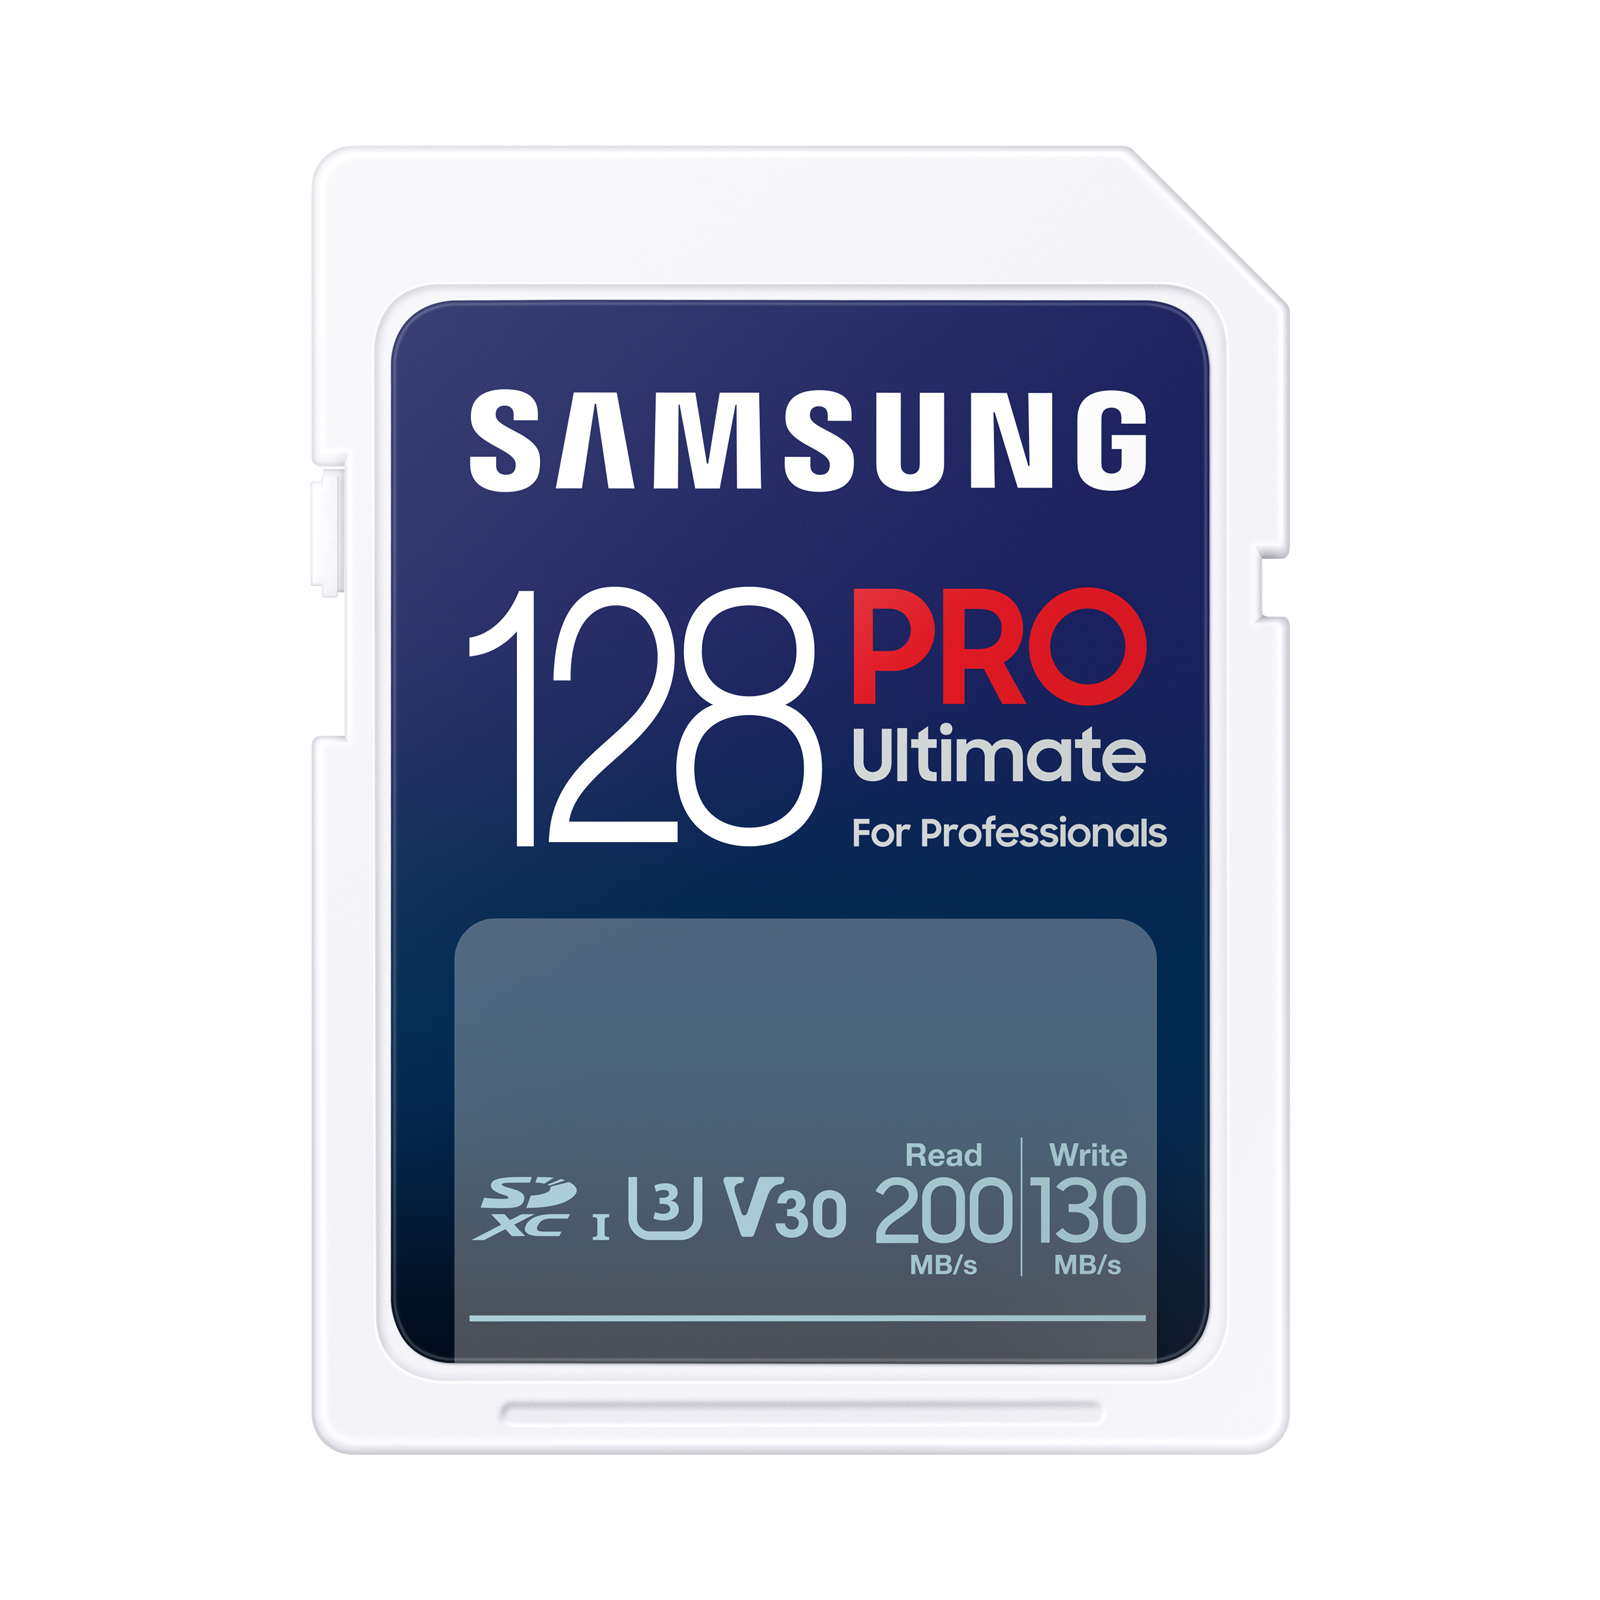 Samsung SD Card PRO Ultimate (128GB)